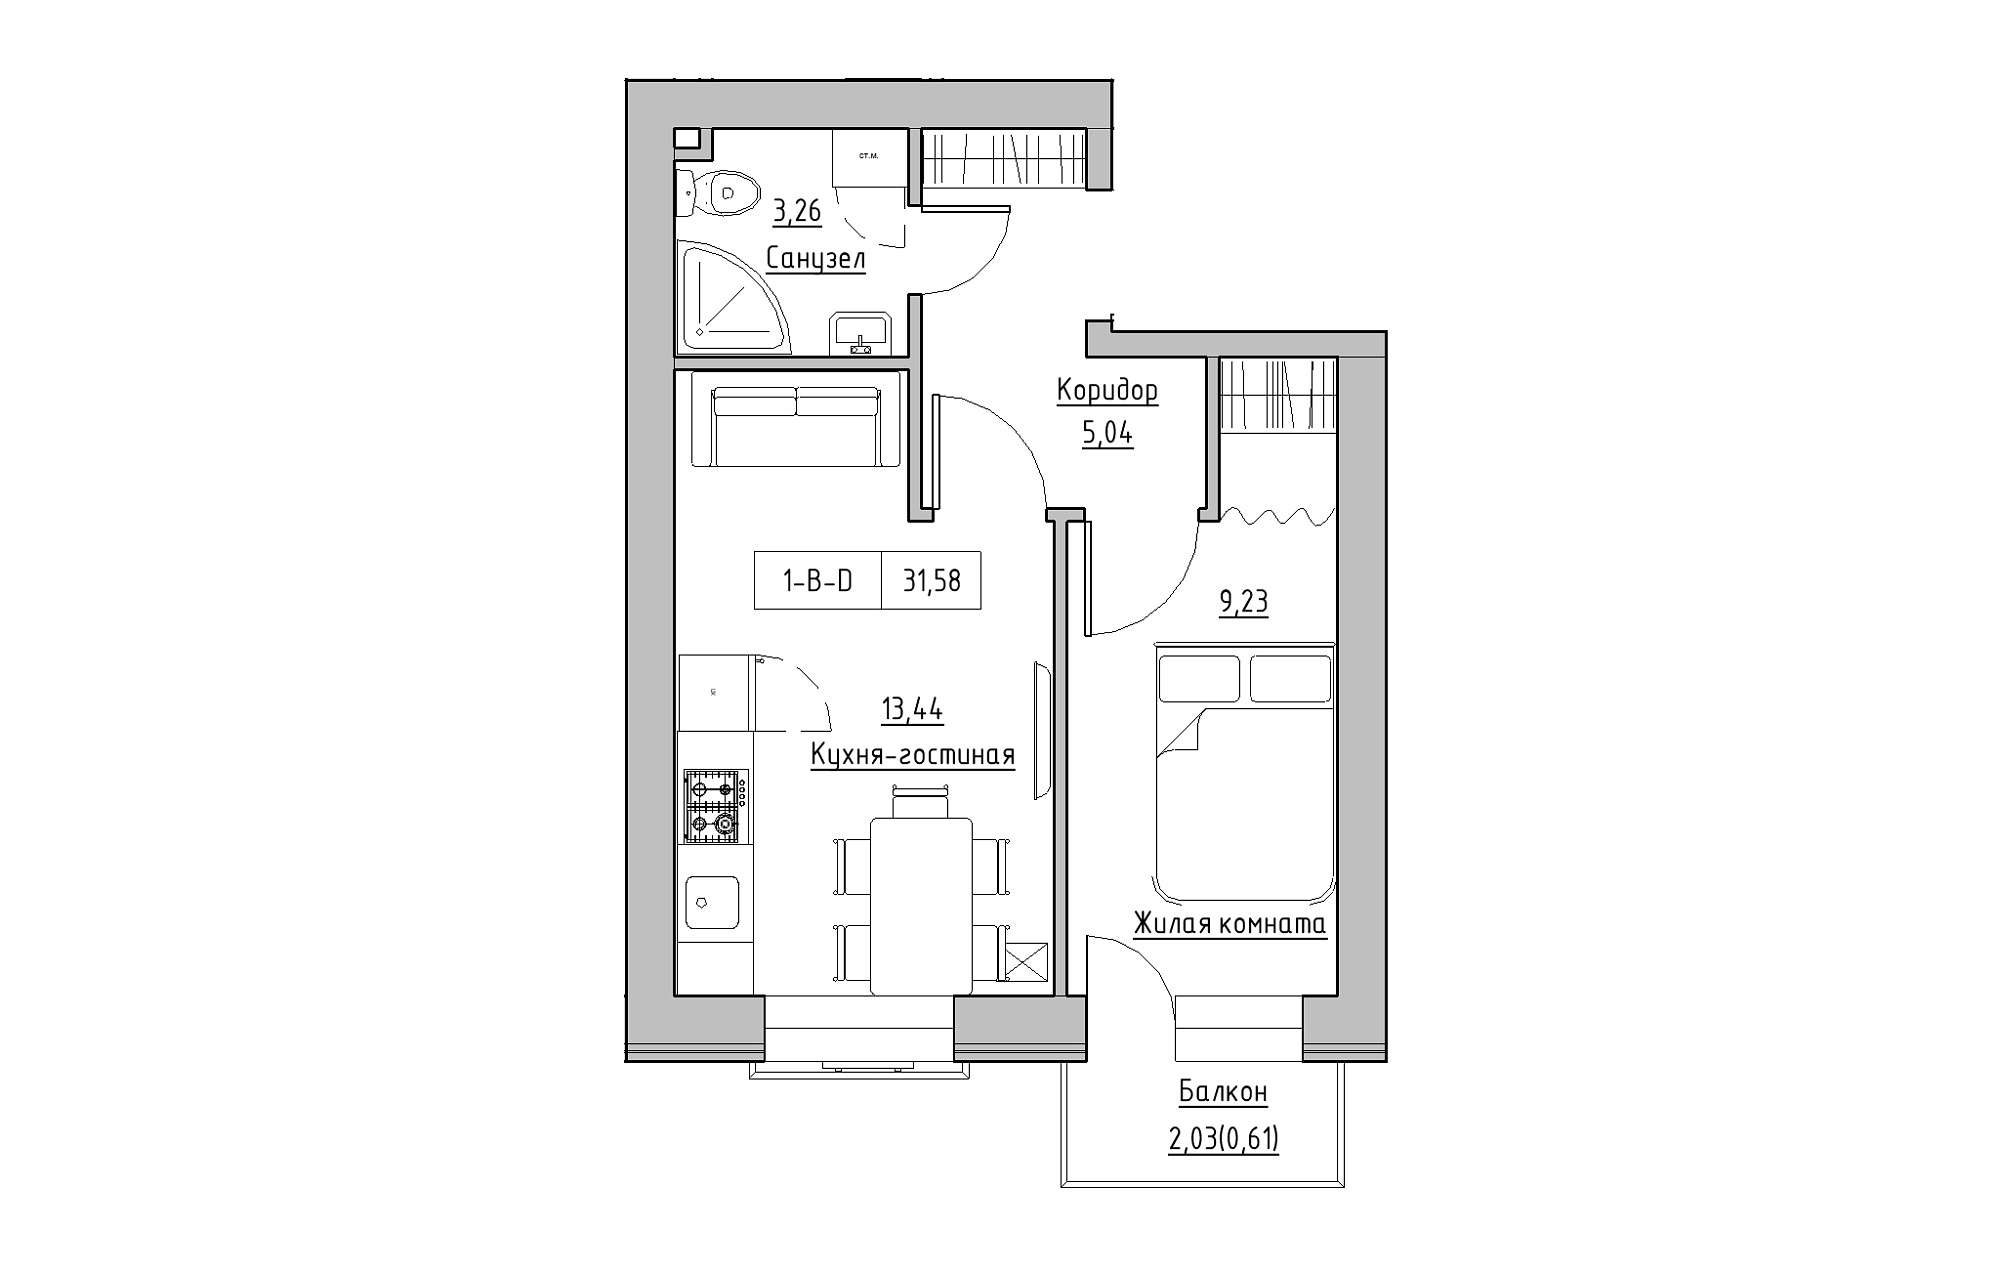 Planning 1-rm flats area 31.58m2, KS-018-05/0003.